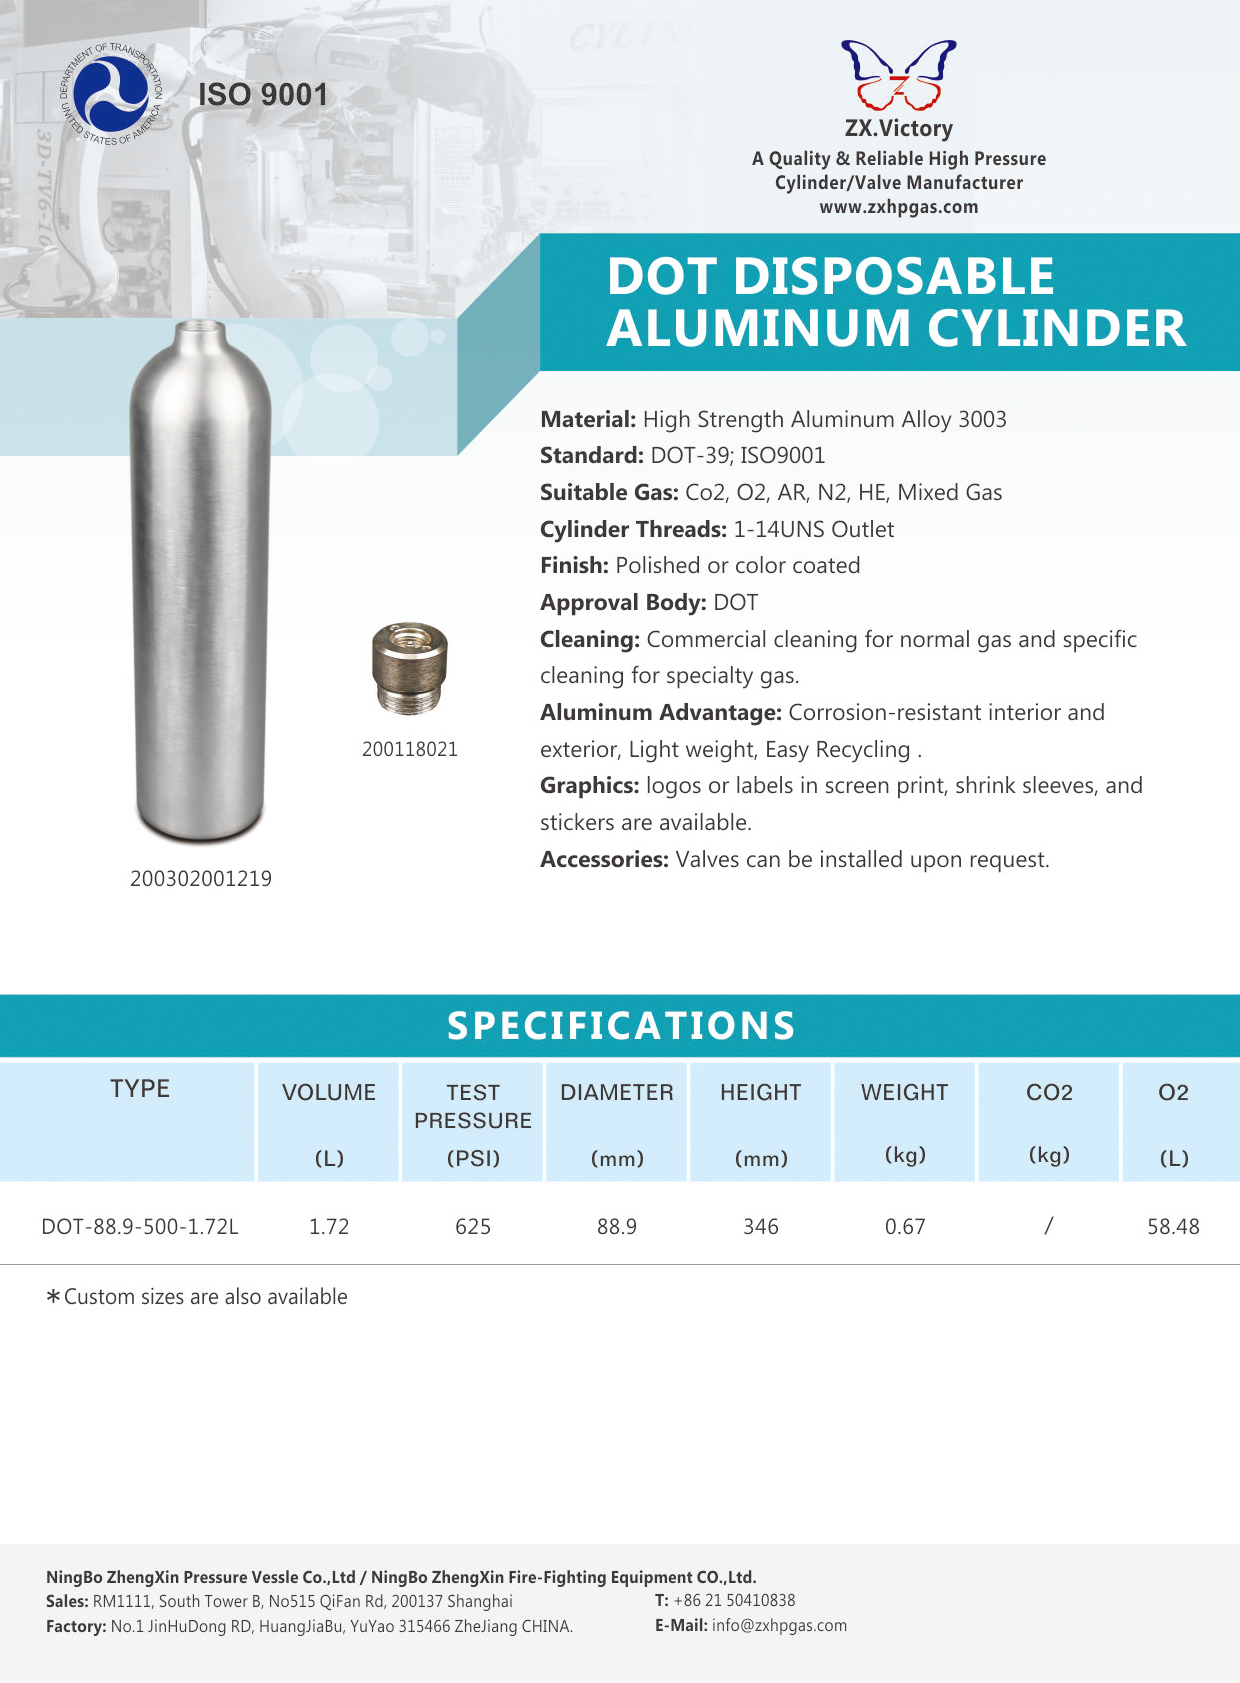 DOT Disposable Cylinder 2